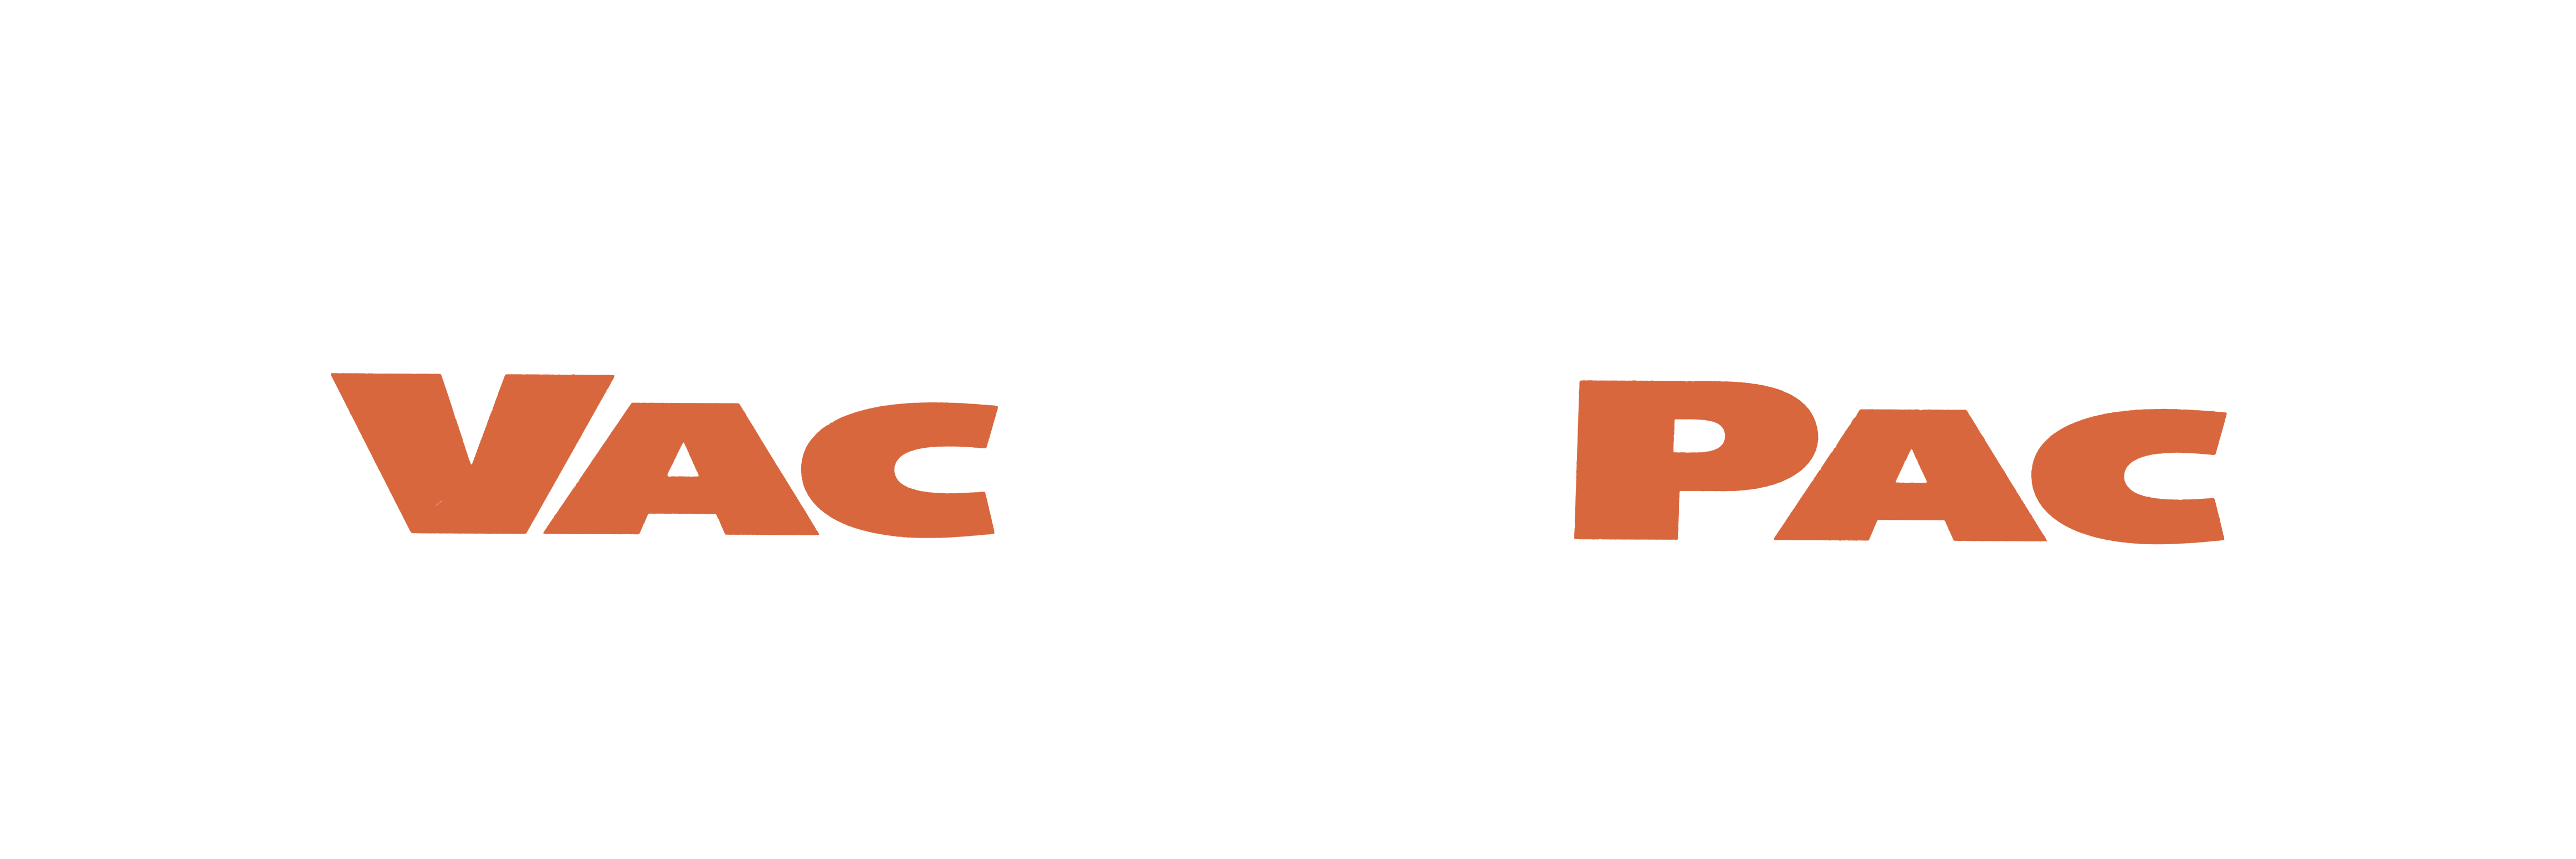 Vac Pac Gutter Clean